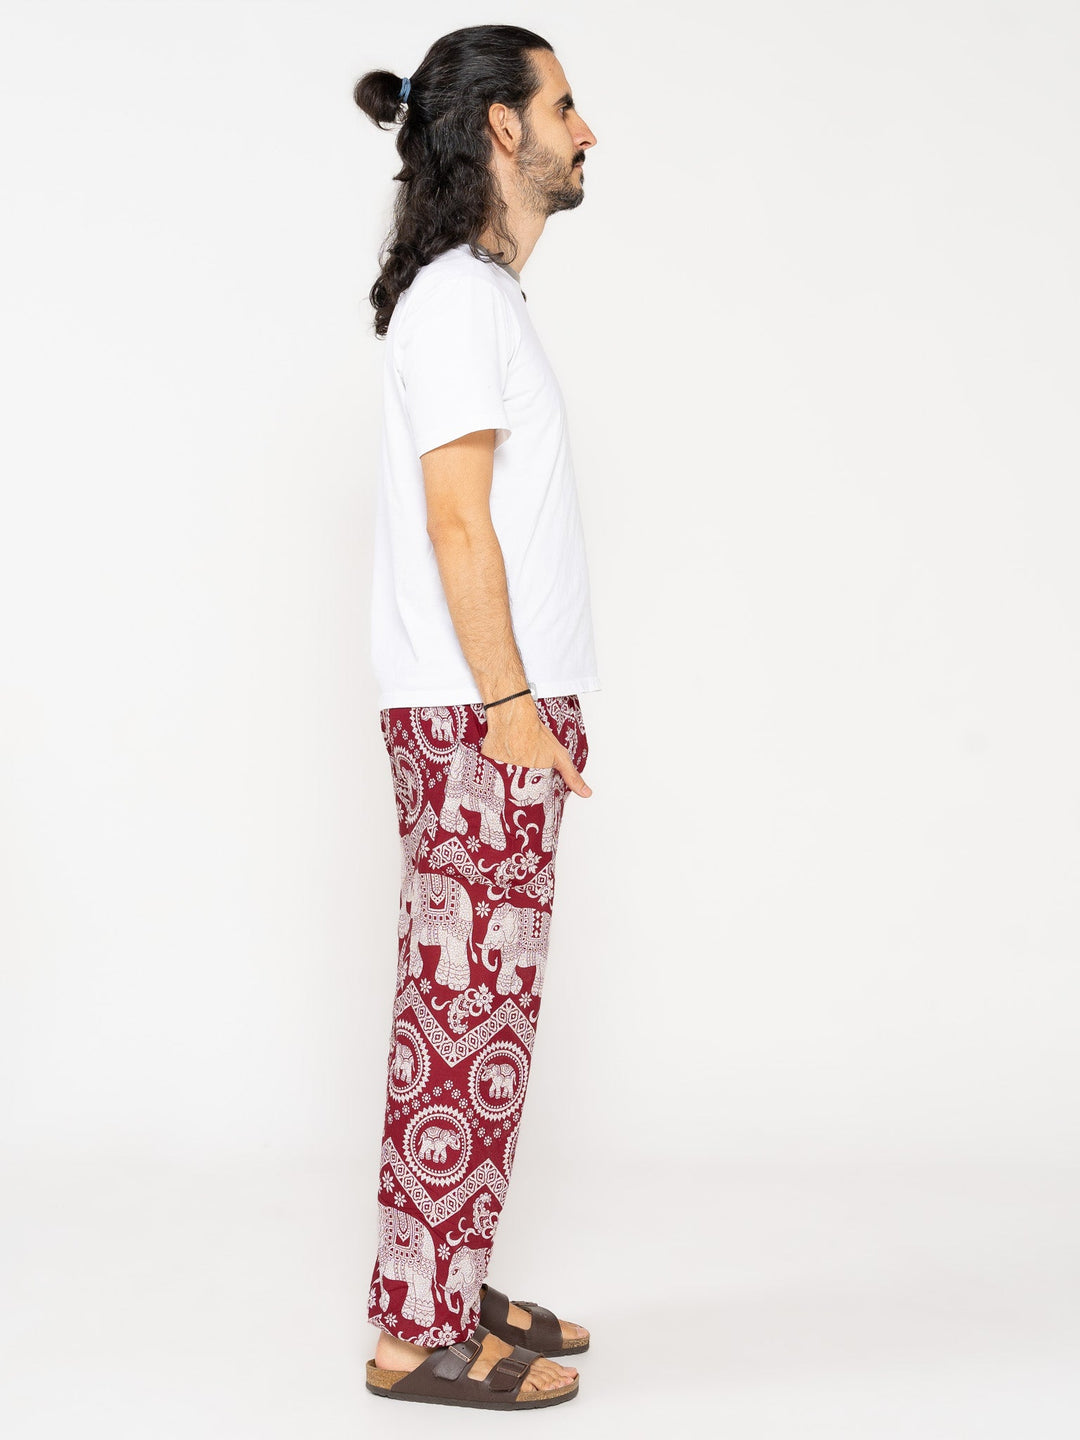 Ahimsa Rojo - Pantsforlove Pantalones anchos, pantalones yoga